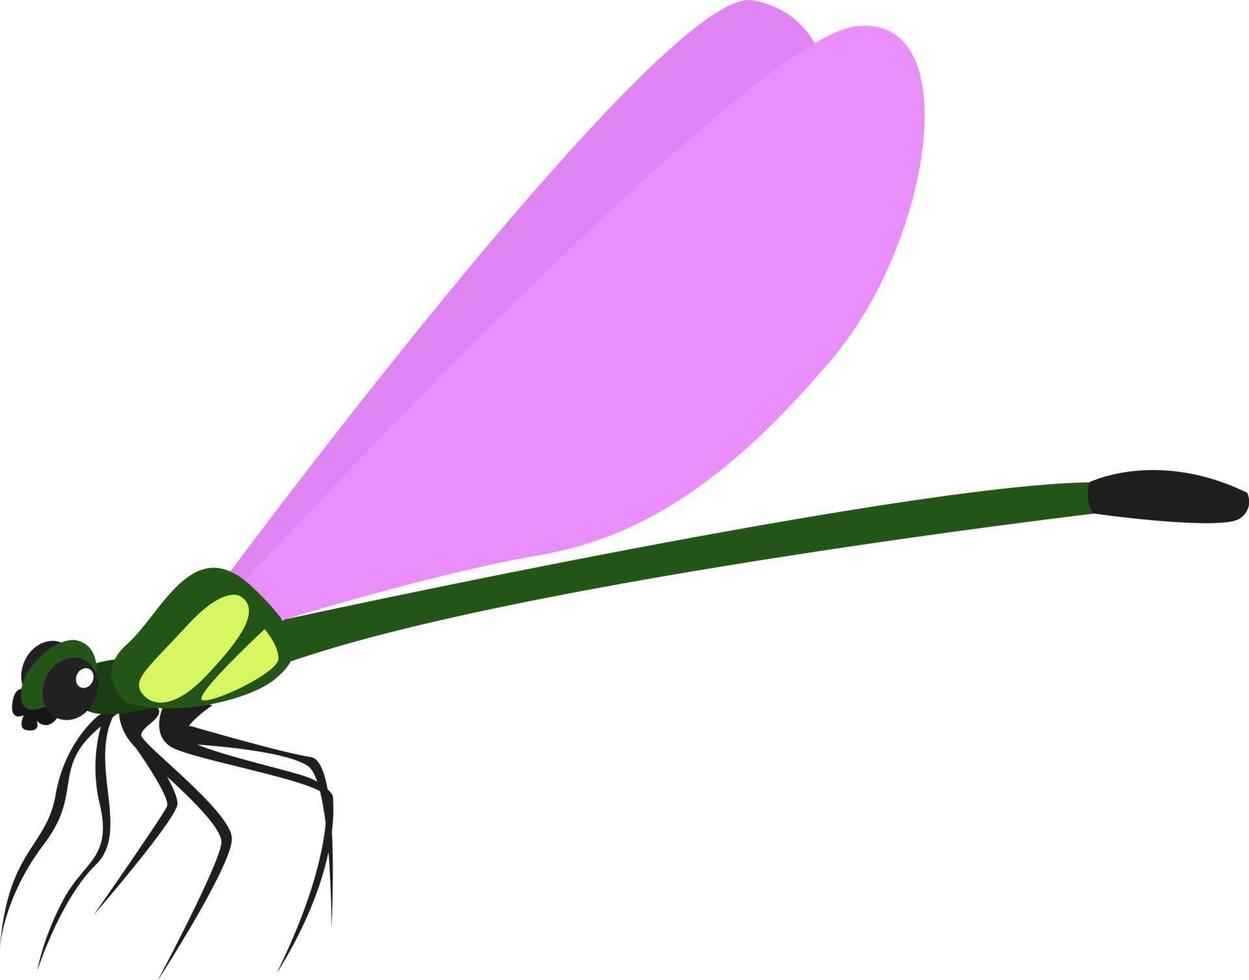 Flying dragonfly, illustration, vector on white background.